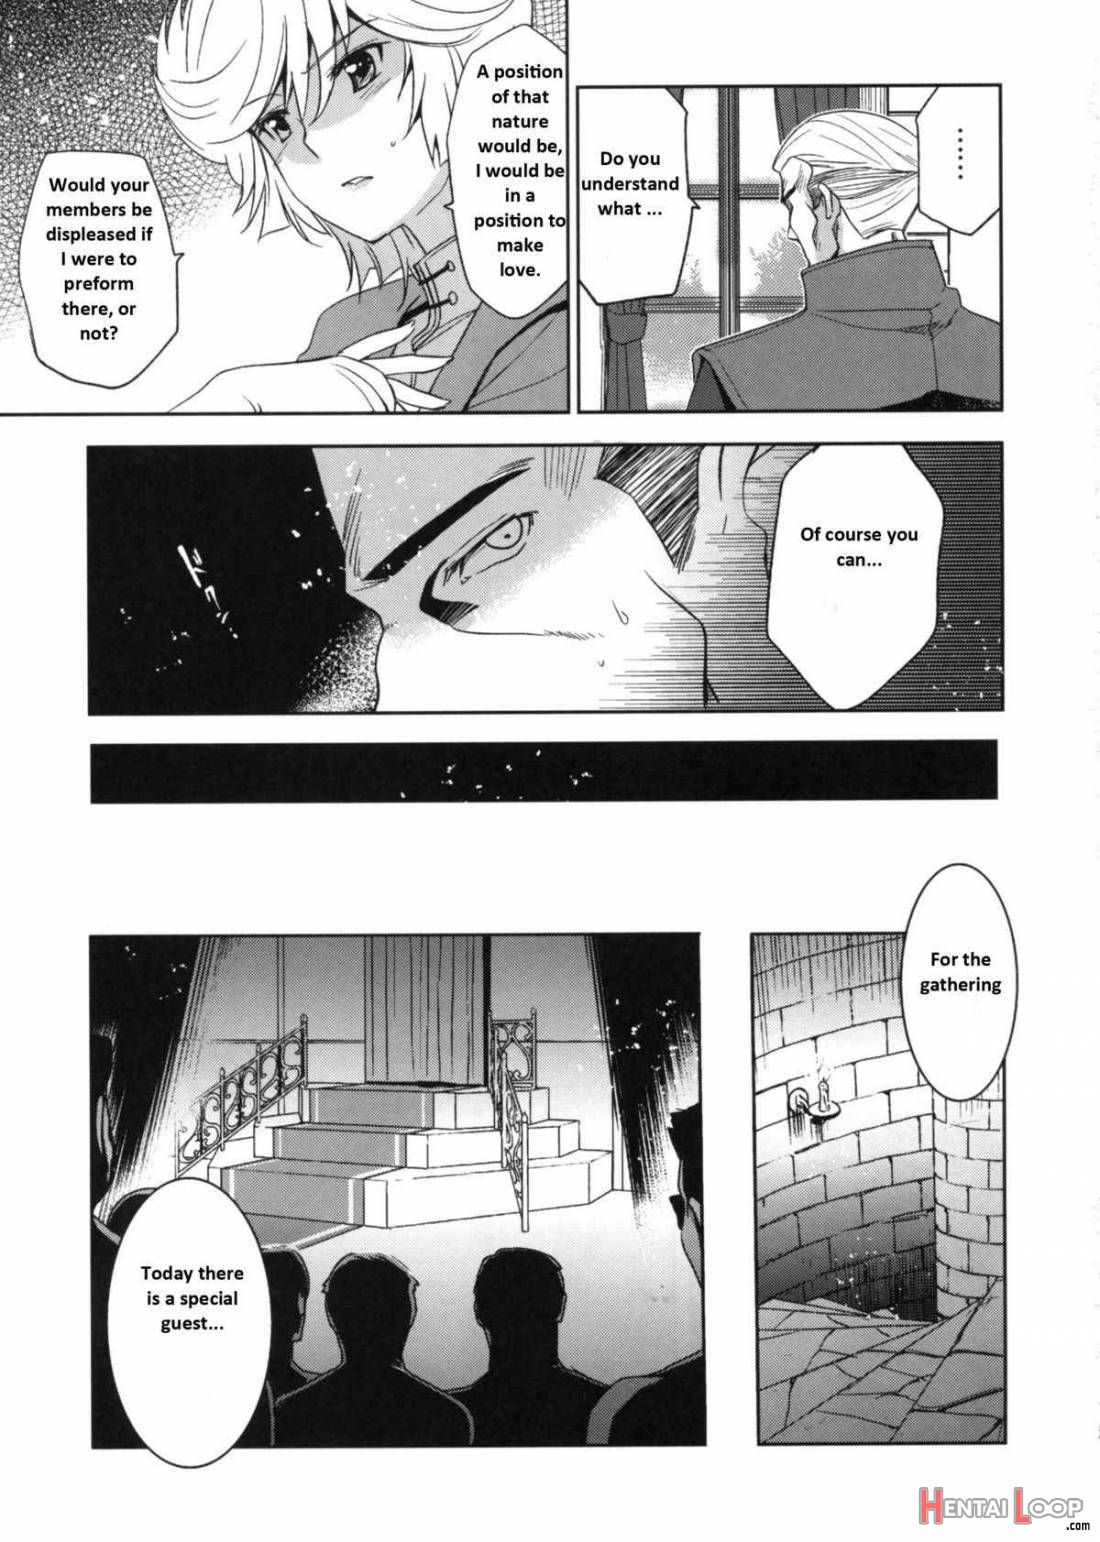 Kanousei no Kemono page 3